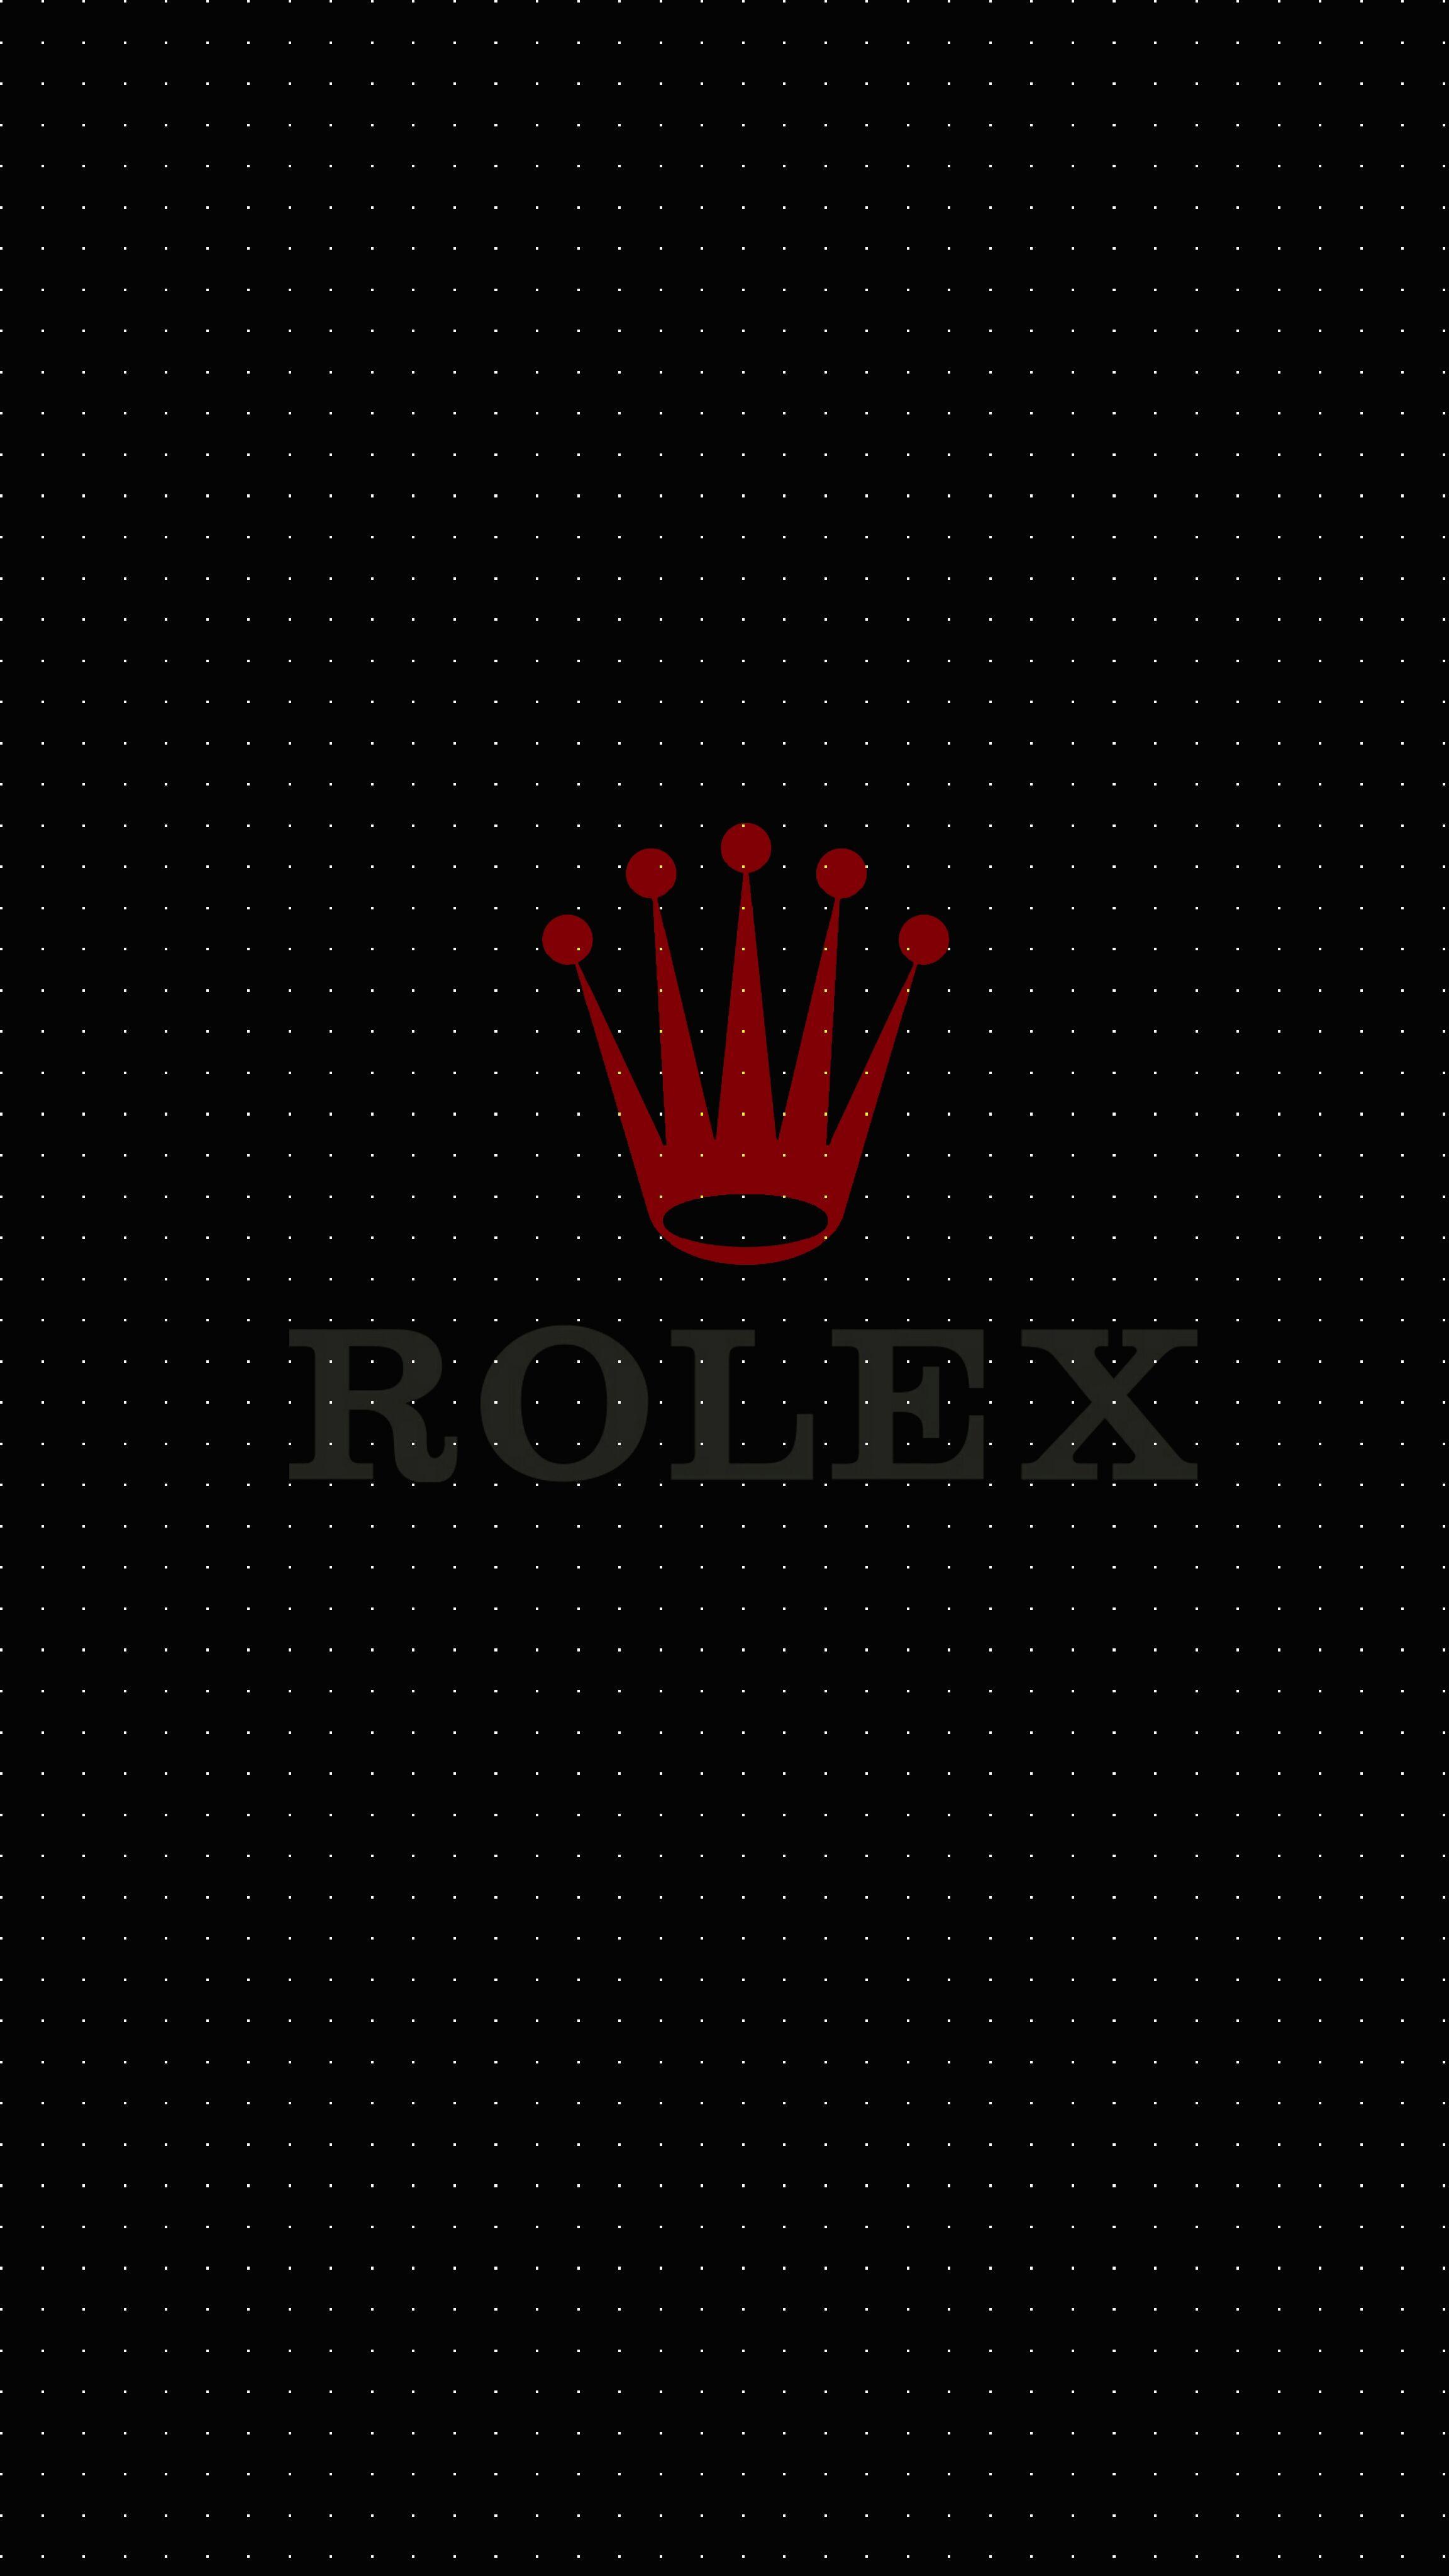 Rolex Logo 4K Wallpapers